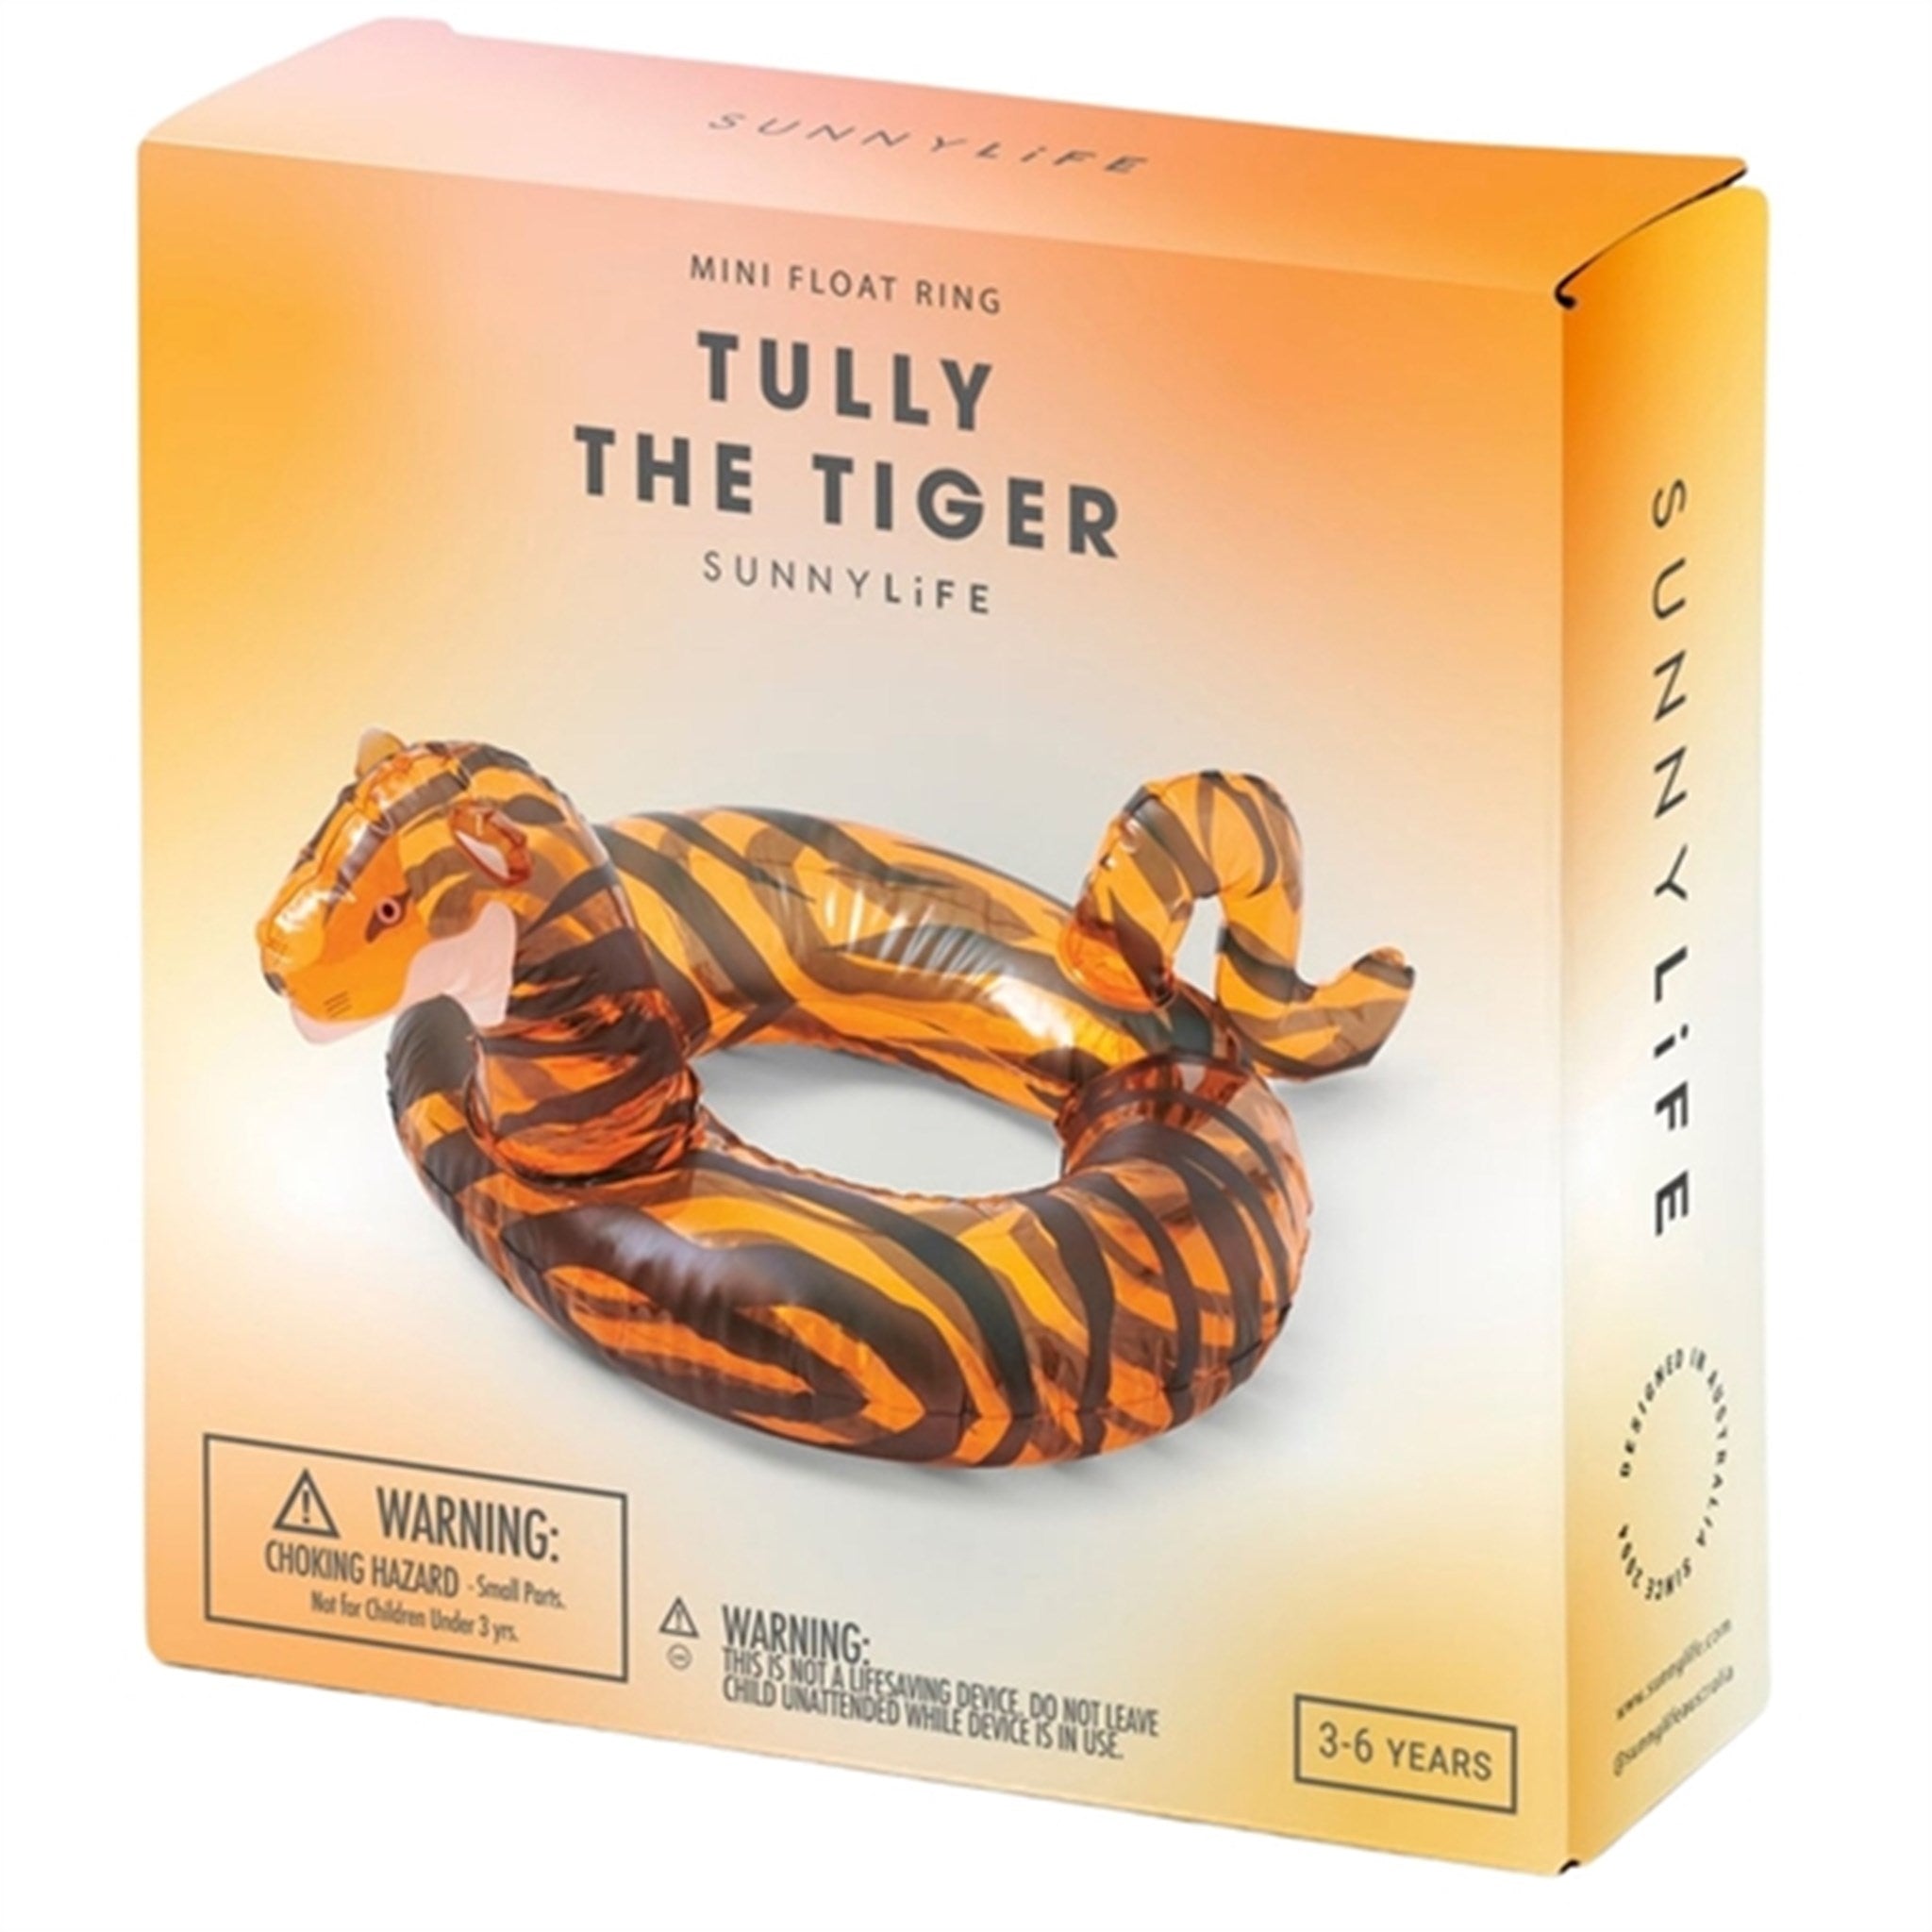 SunnyLife Mini Float Ring Tully the Tiger 3